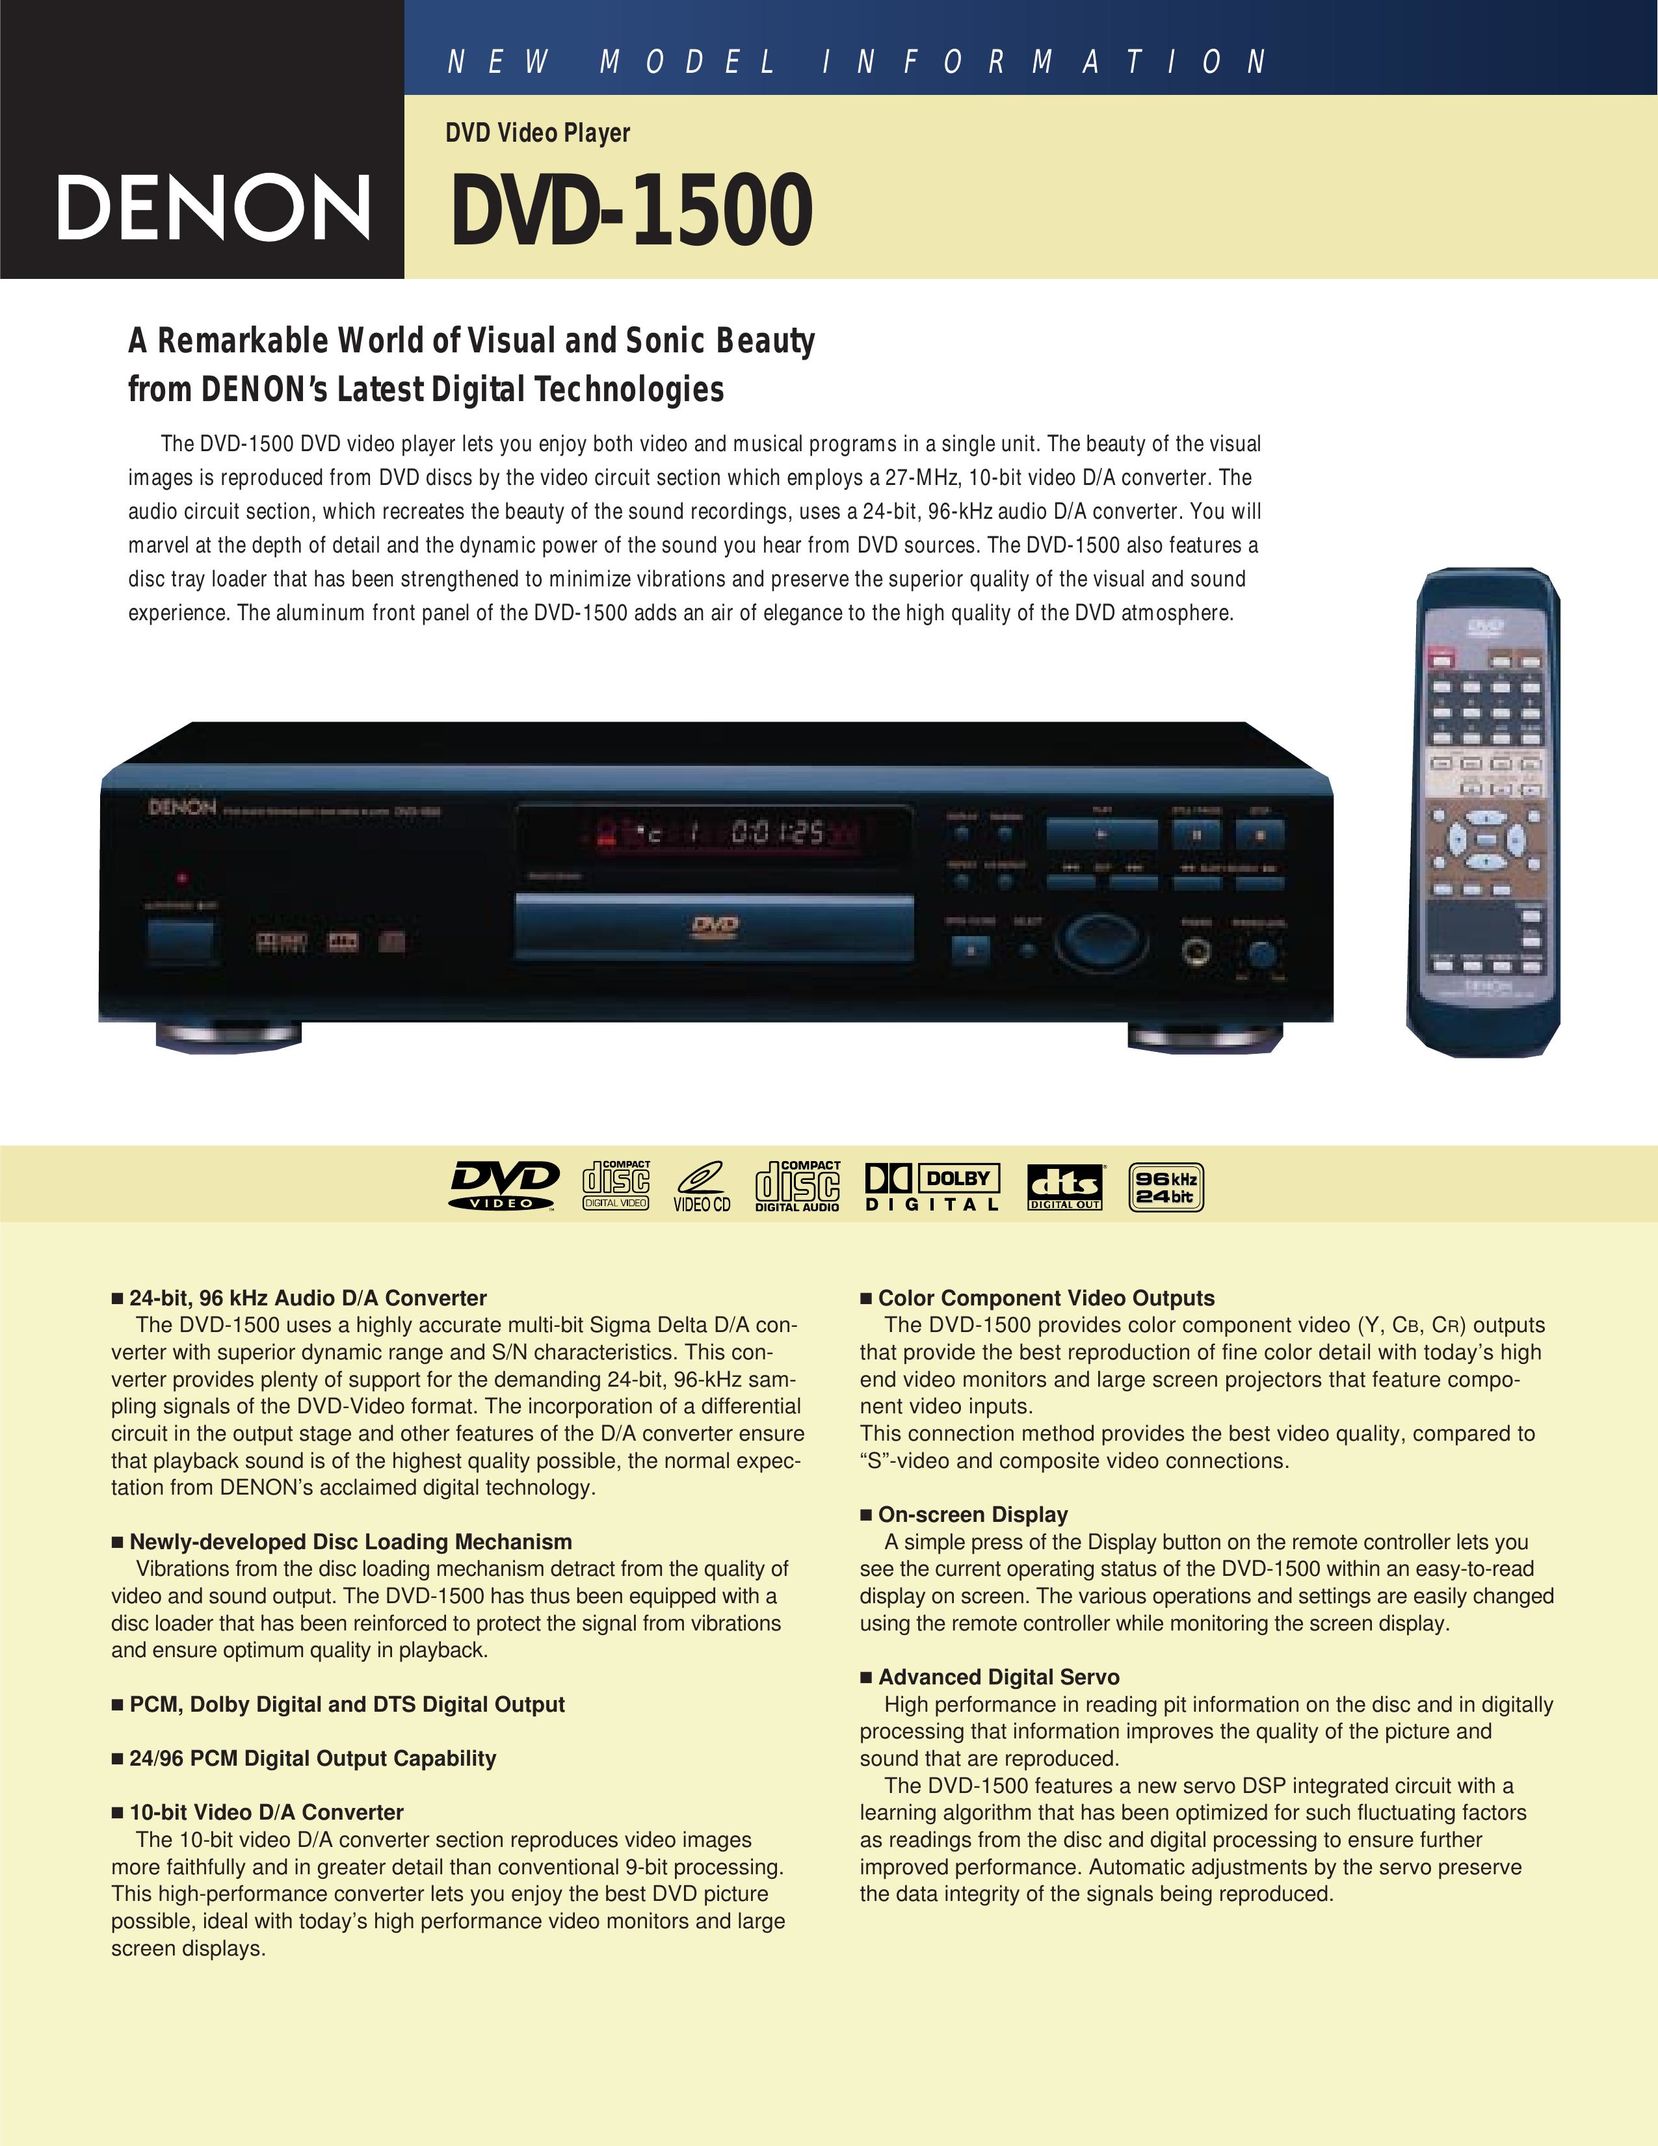 Denon DVD-1500 DVD Player User Manual